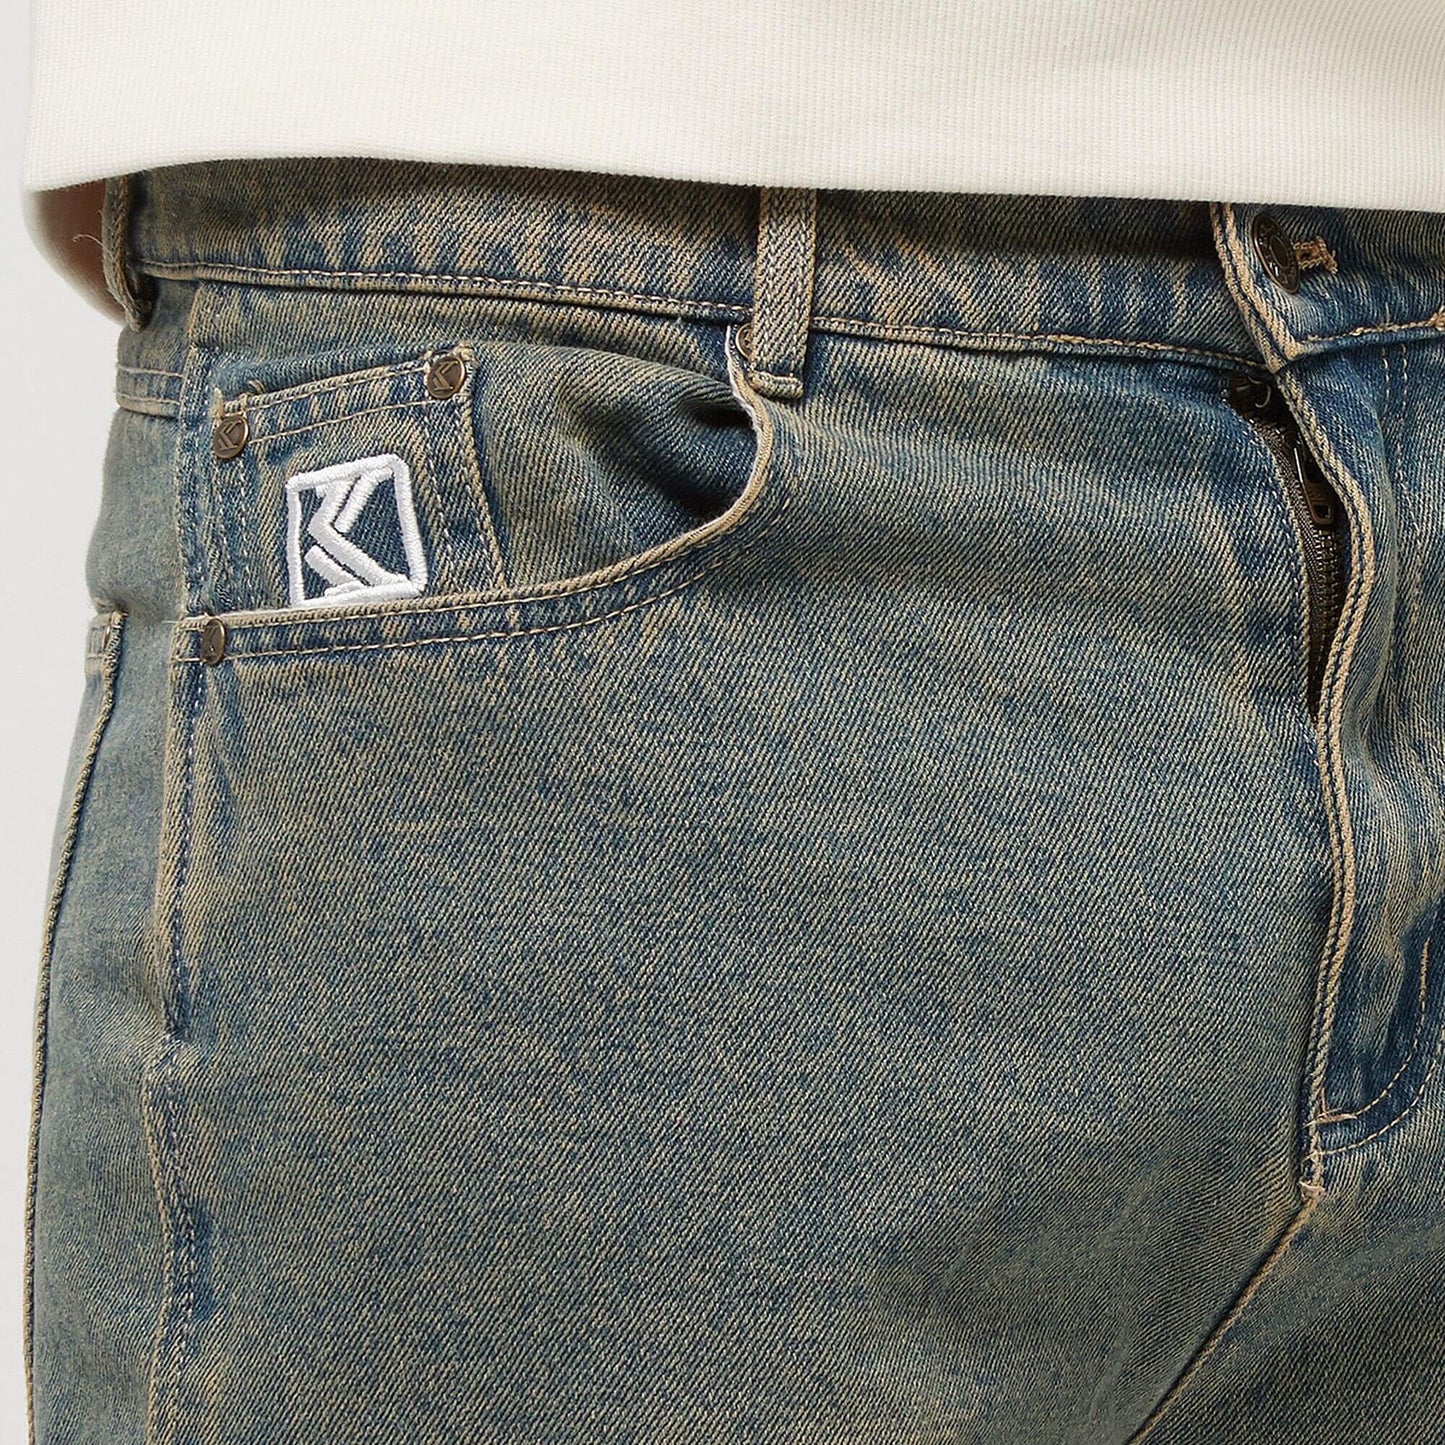 Karl Kani KK OG Baggy Workwear Denim dirty vintage blue